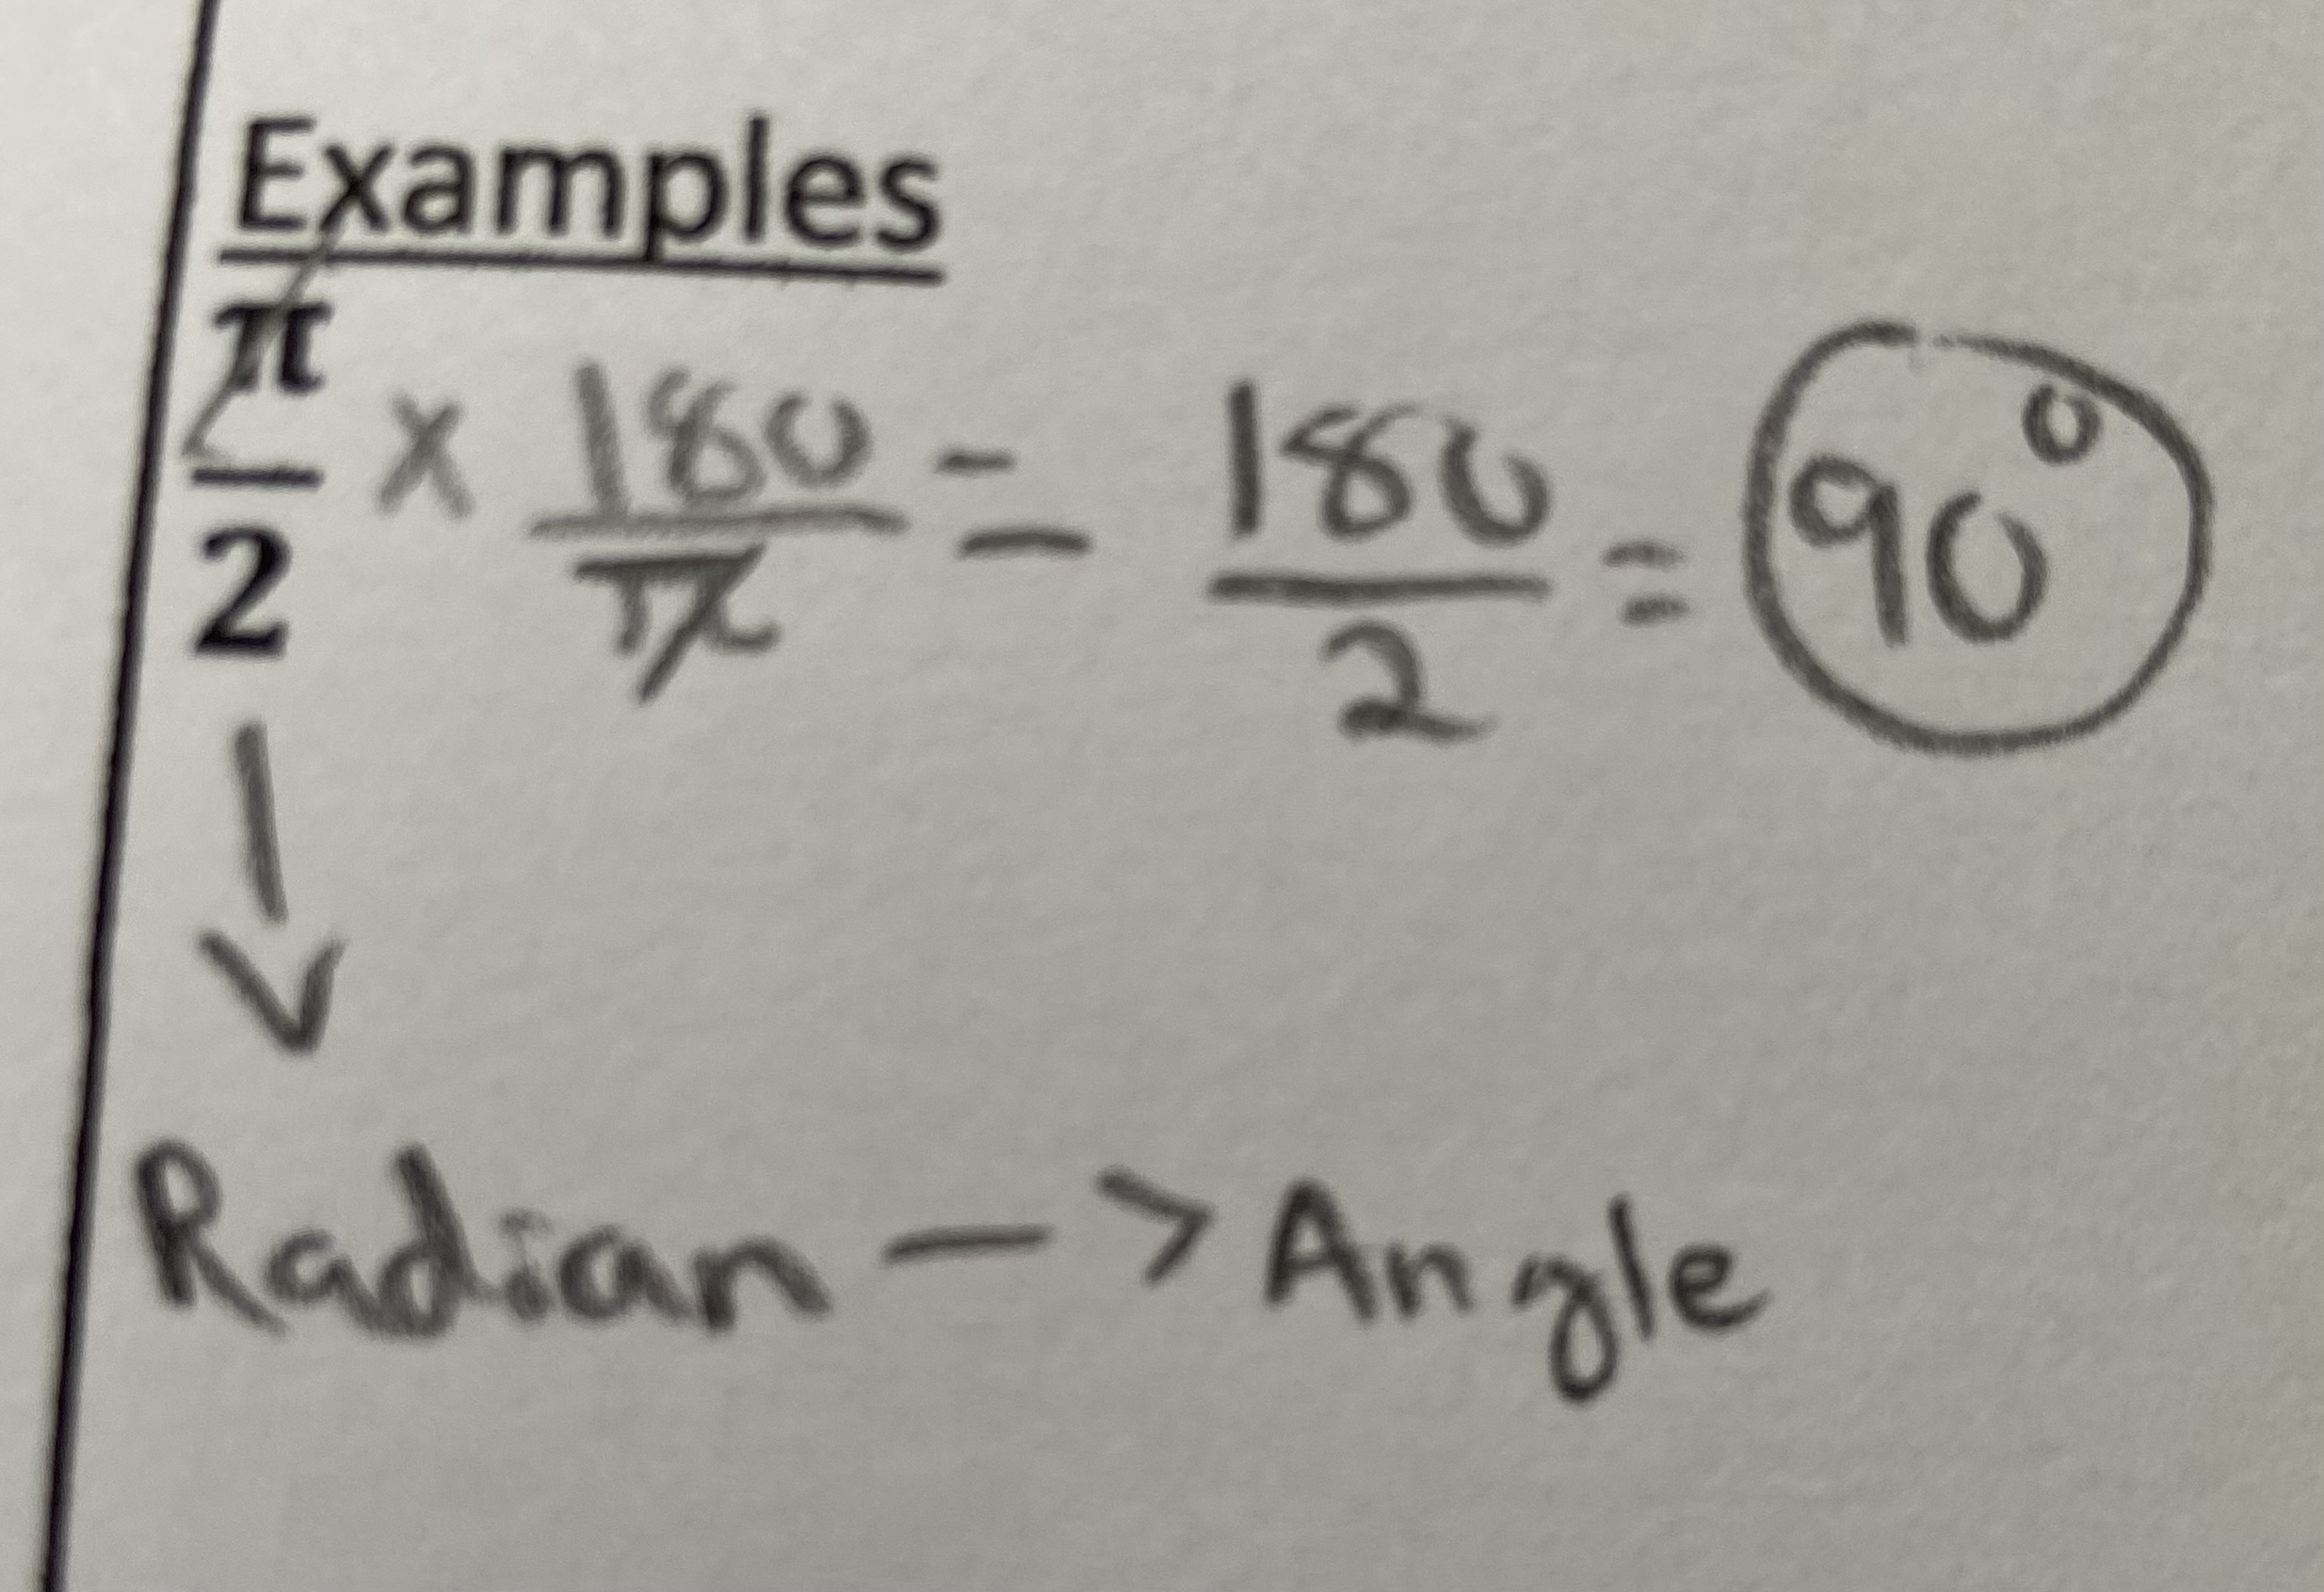 <p>How do you turn a radian into an angle?</p>